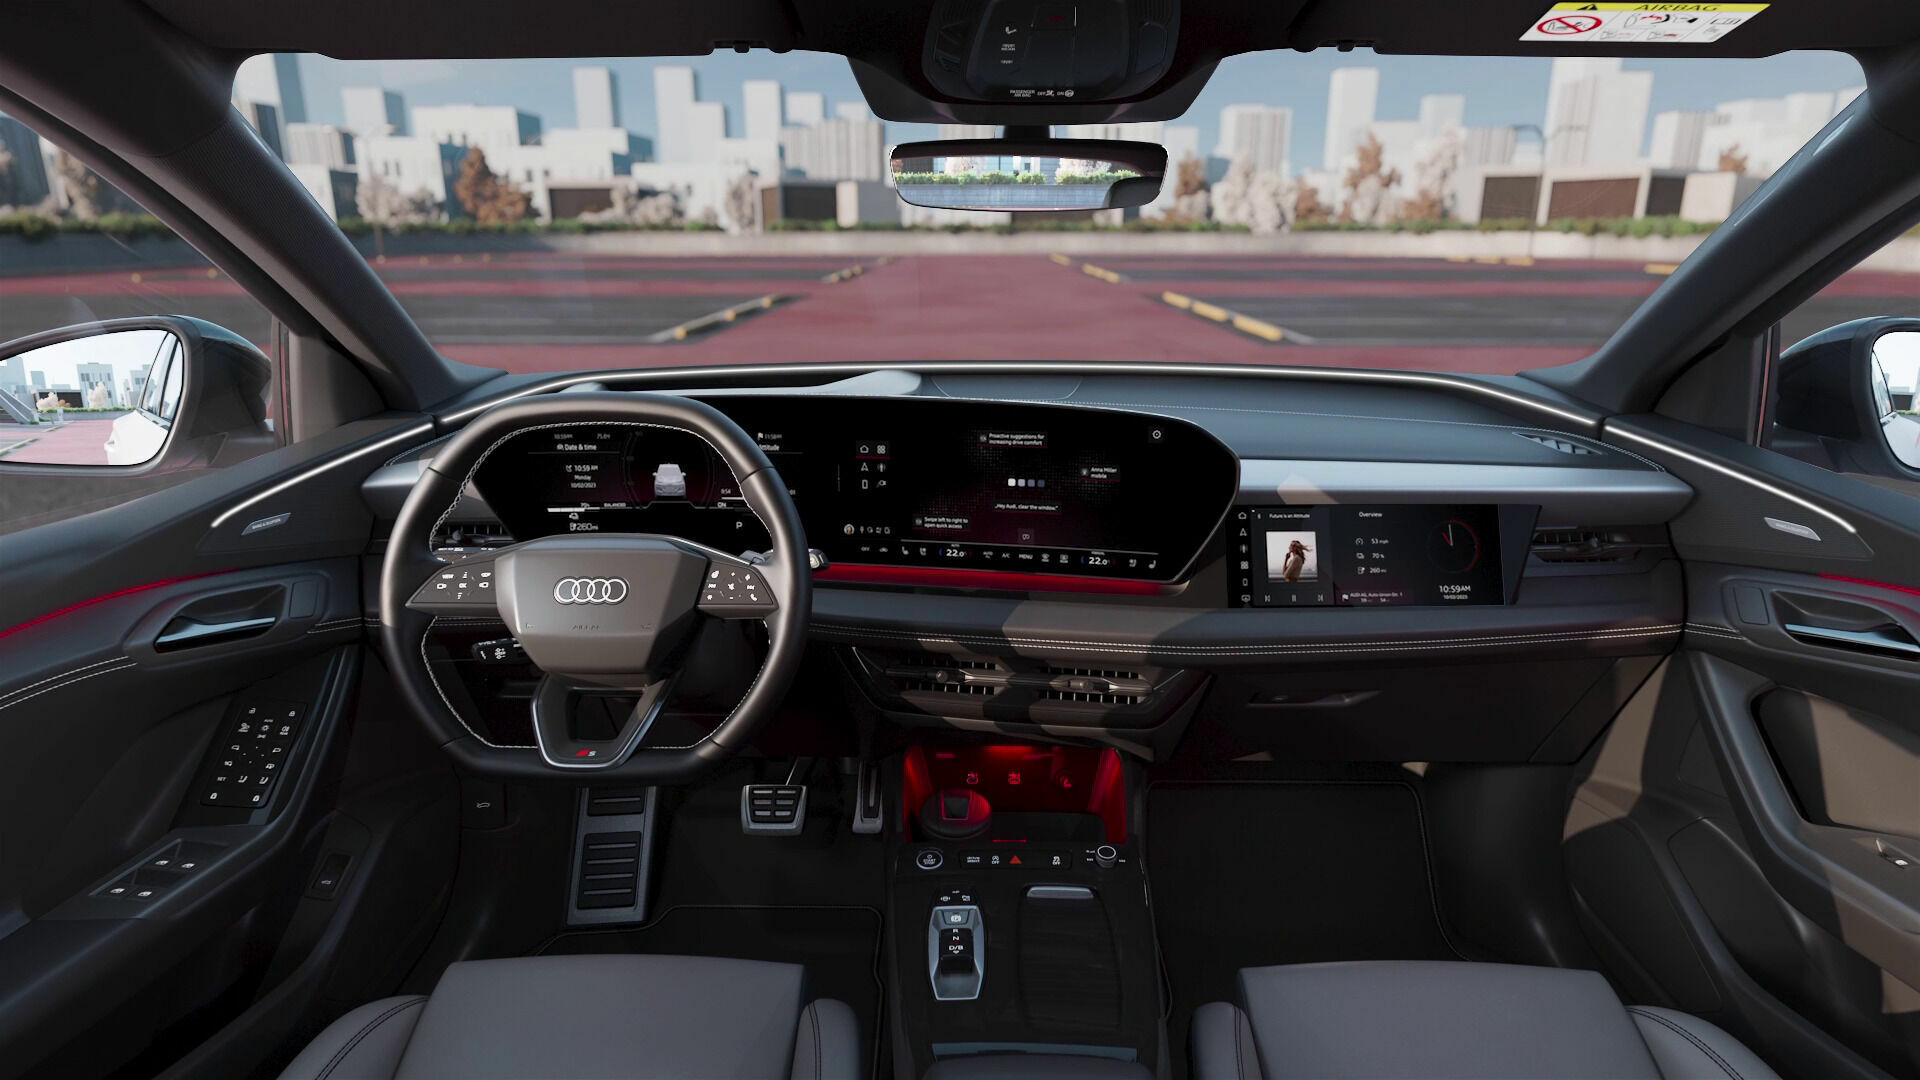 Audi Q6 e-tron Prototyp – Interieur-Bedienkonzept und Betriebssystem – Animation